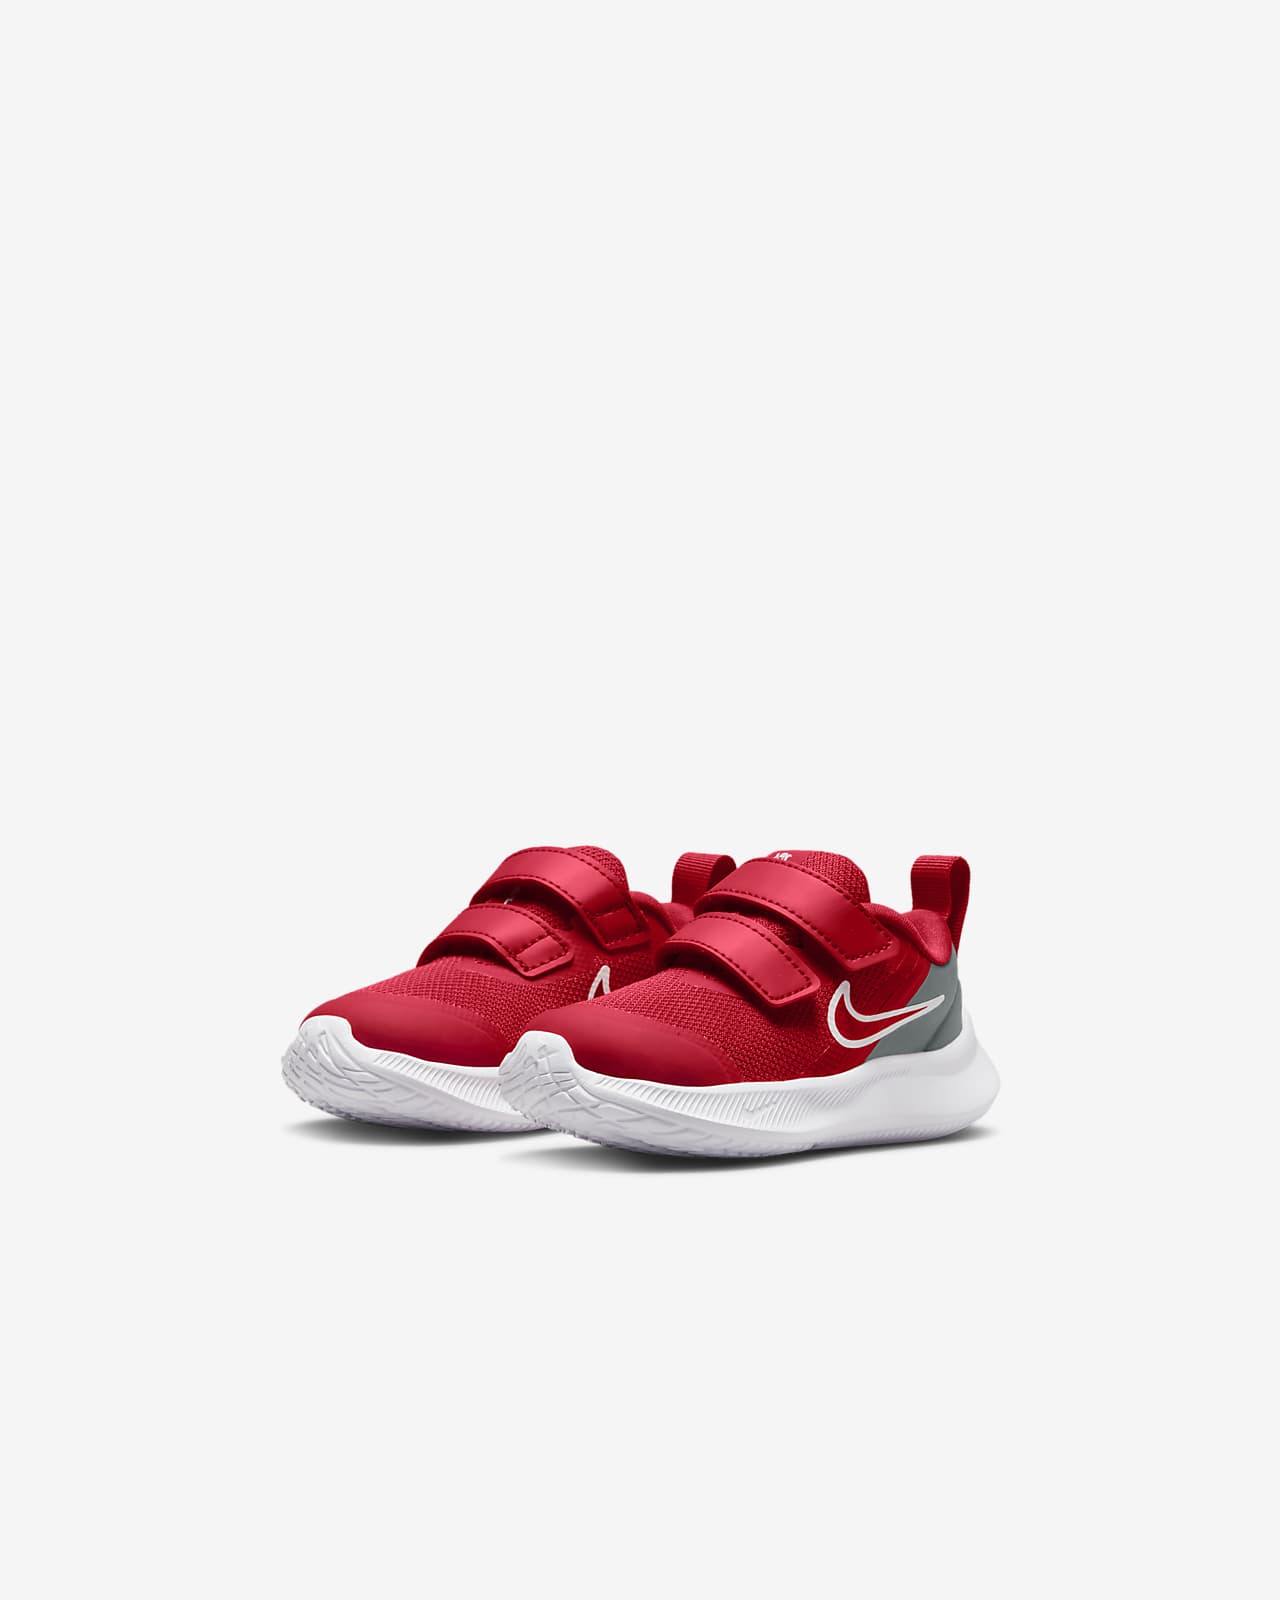 Nike Star Baby/Toddler 3 Shoes. Runner